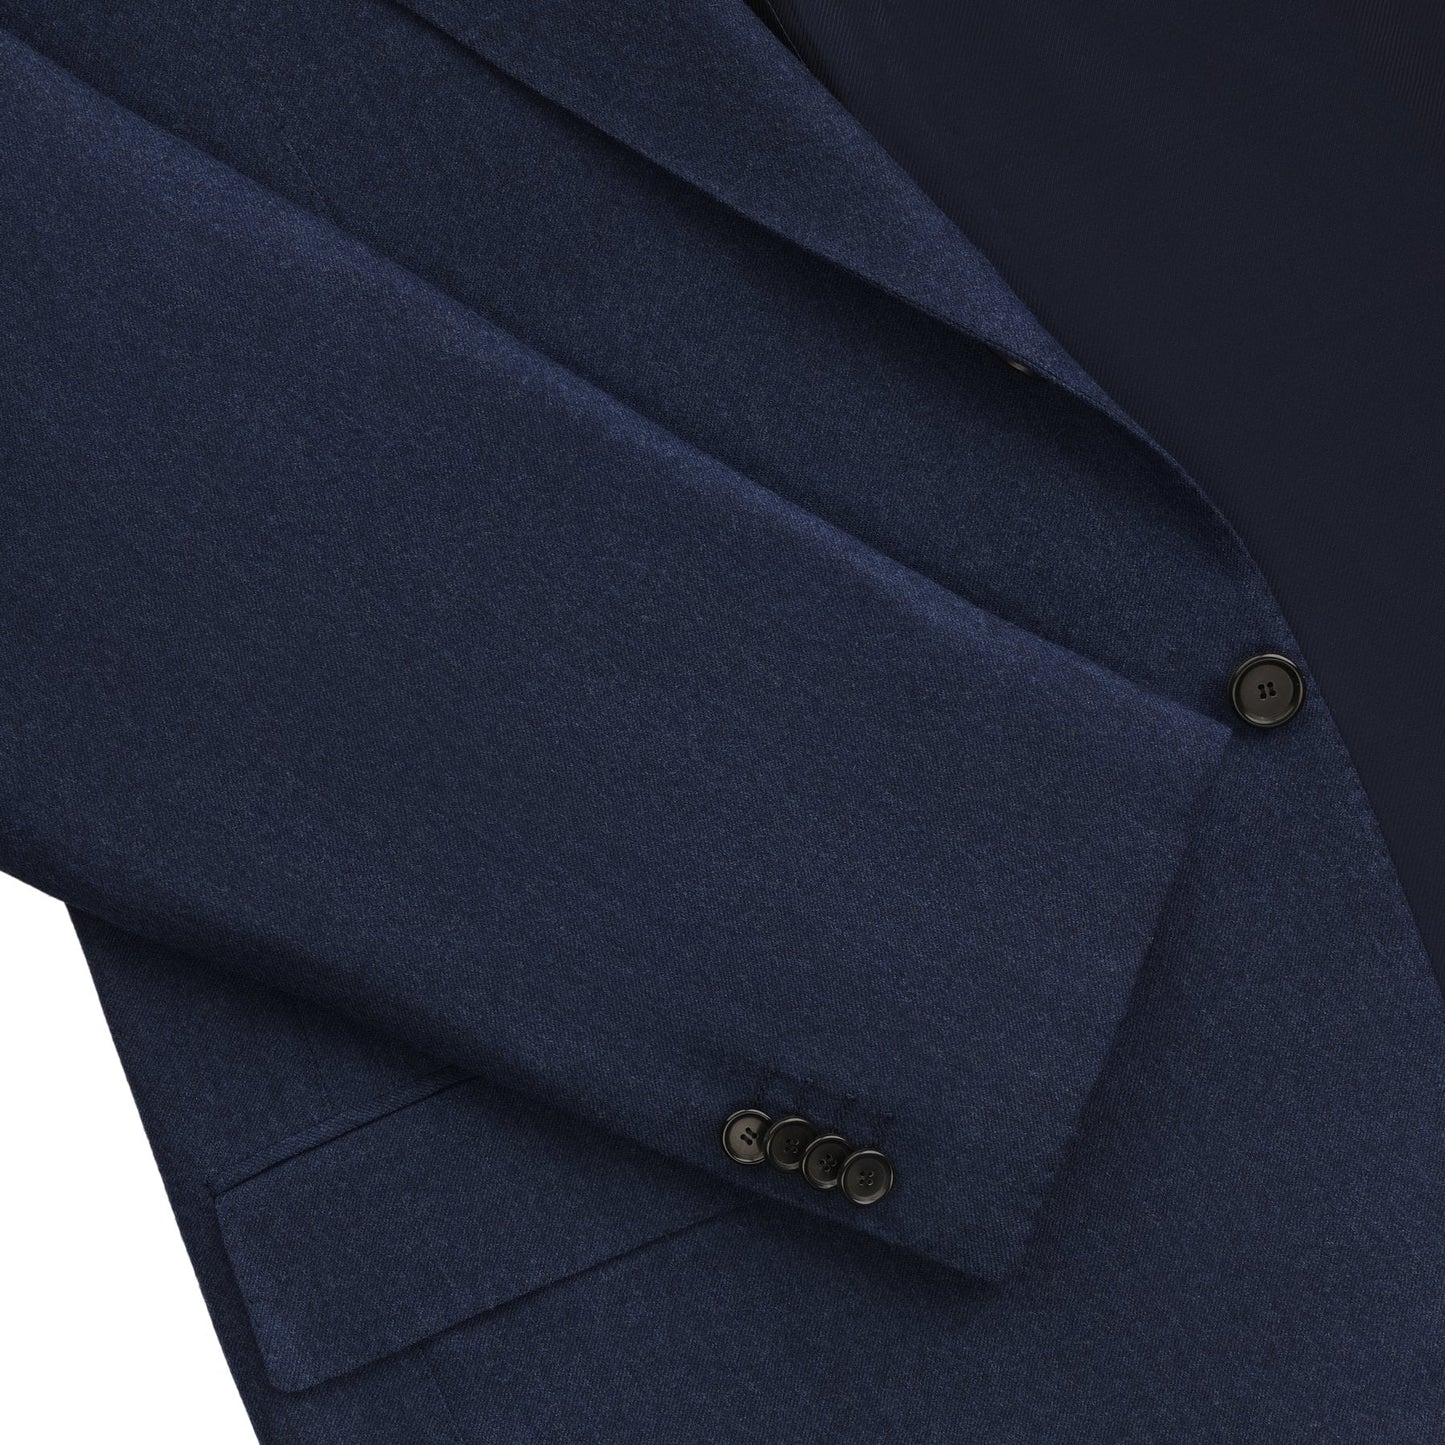 Cesare Attolini Single-Breasted Wool Suit in Blue - SARTALE